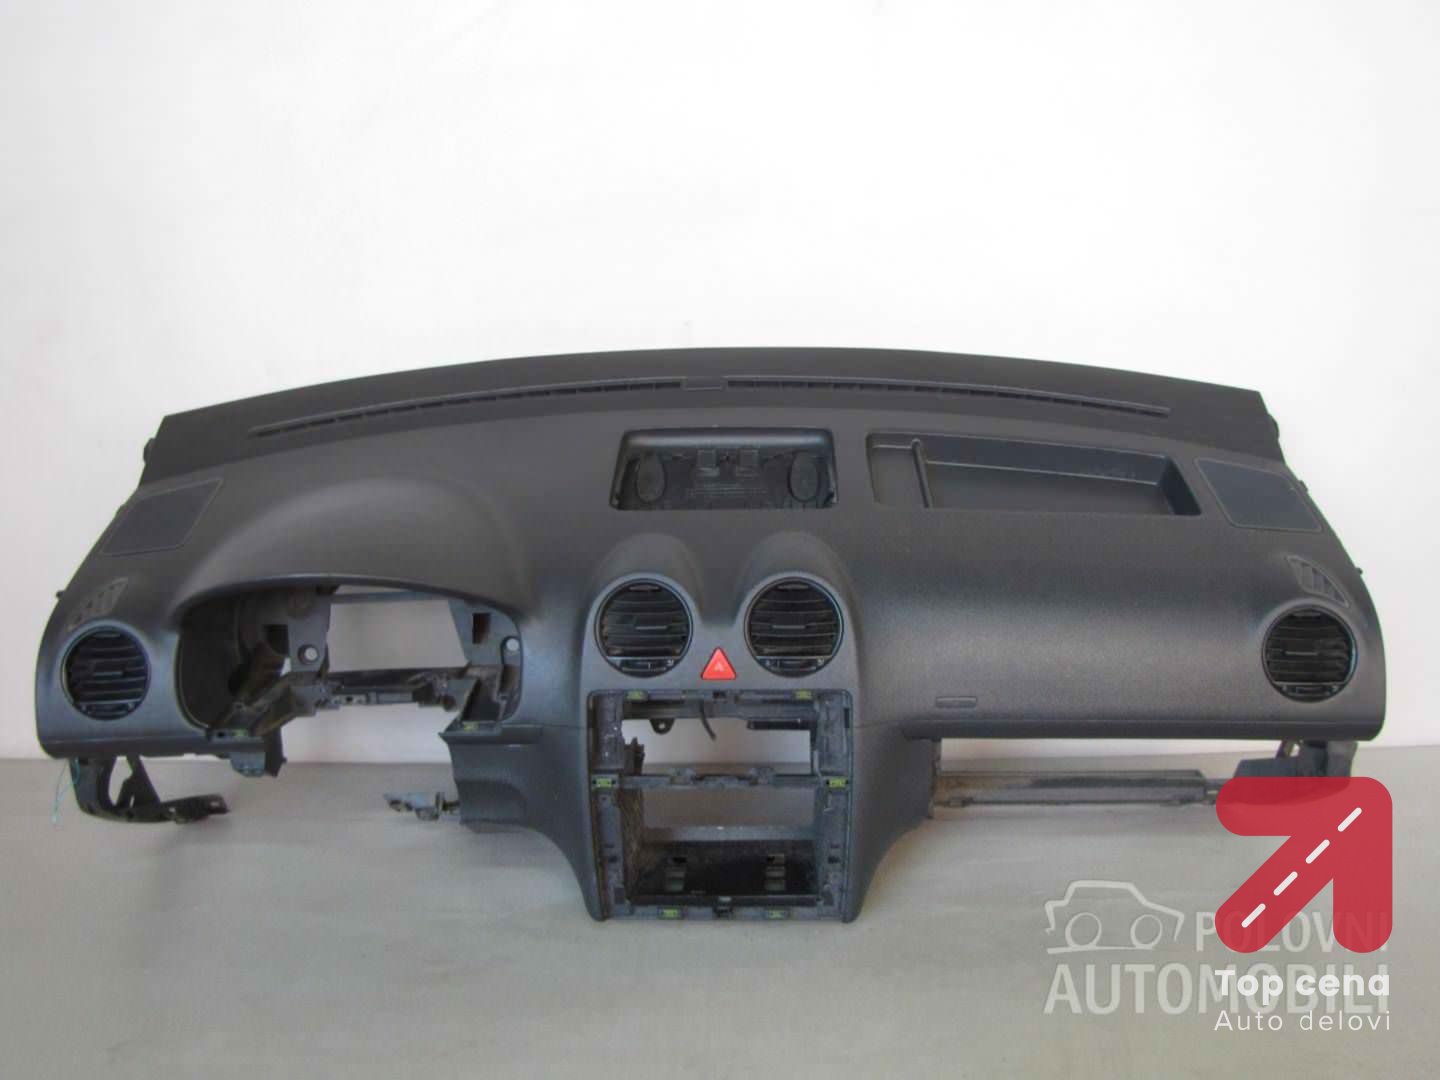 KOMPLET SET TABLA AIRBAG za Volkswagen Caddy od 2003. do 2010. god.